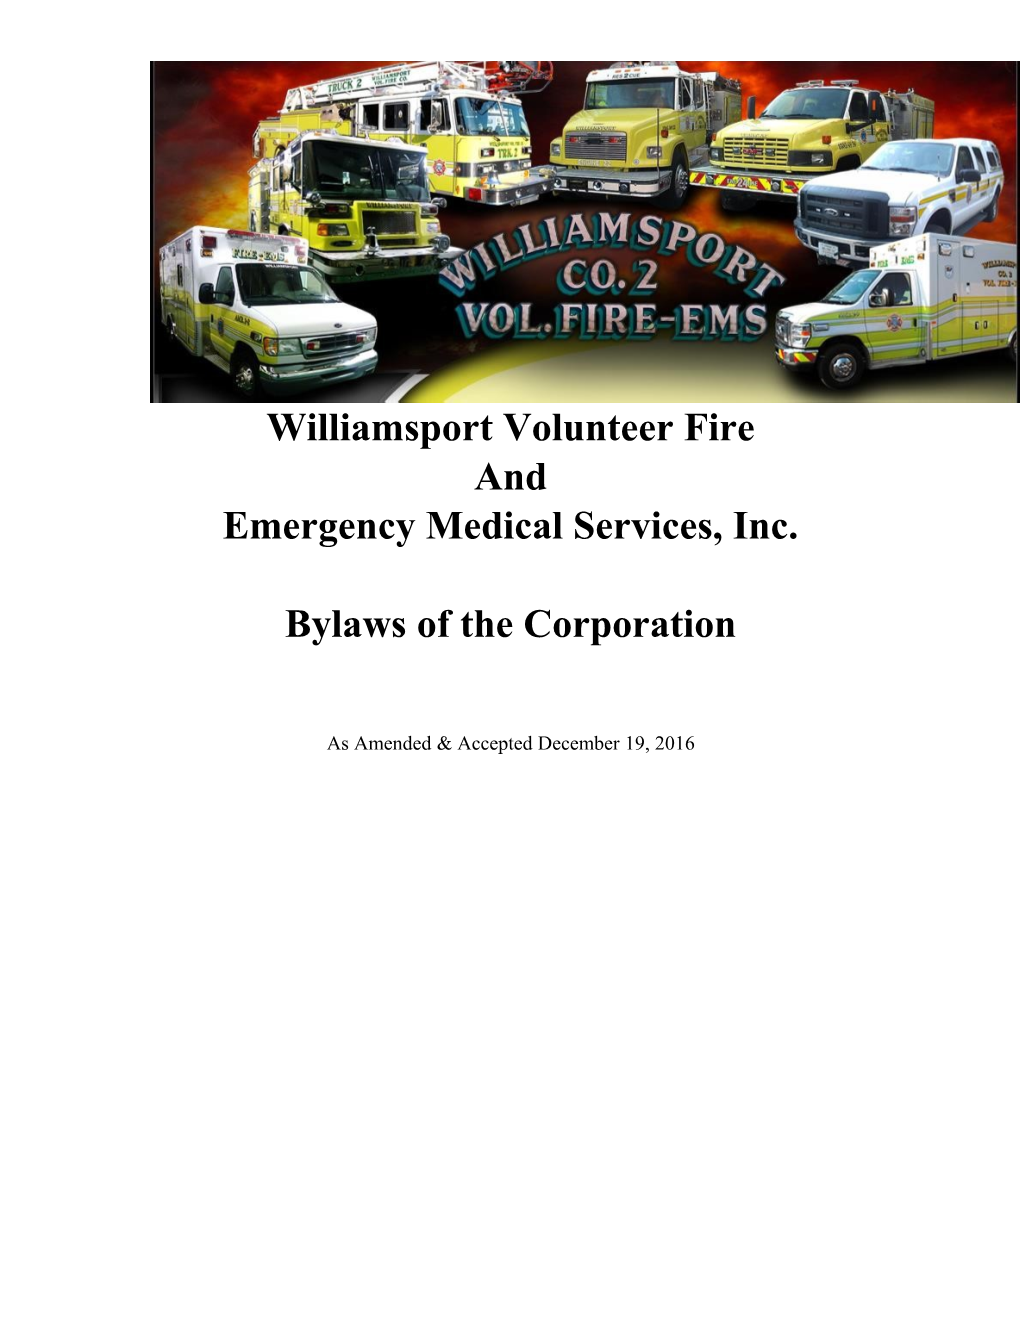 Williamsport Fire & EMS, Inc